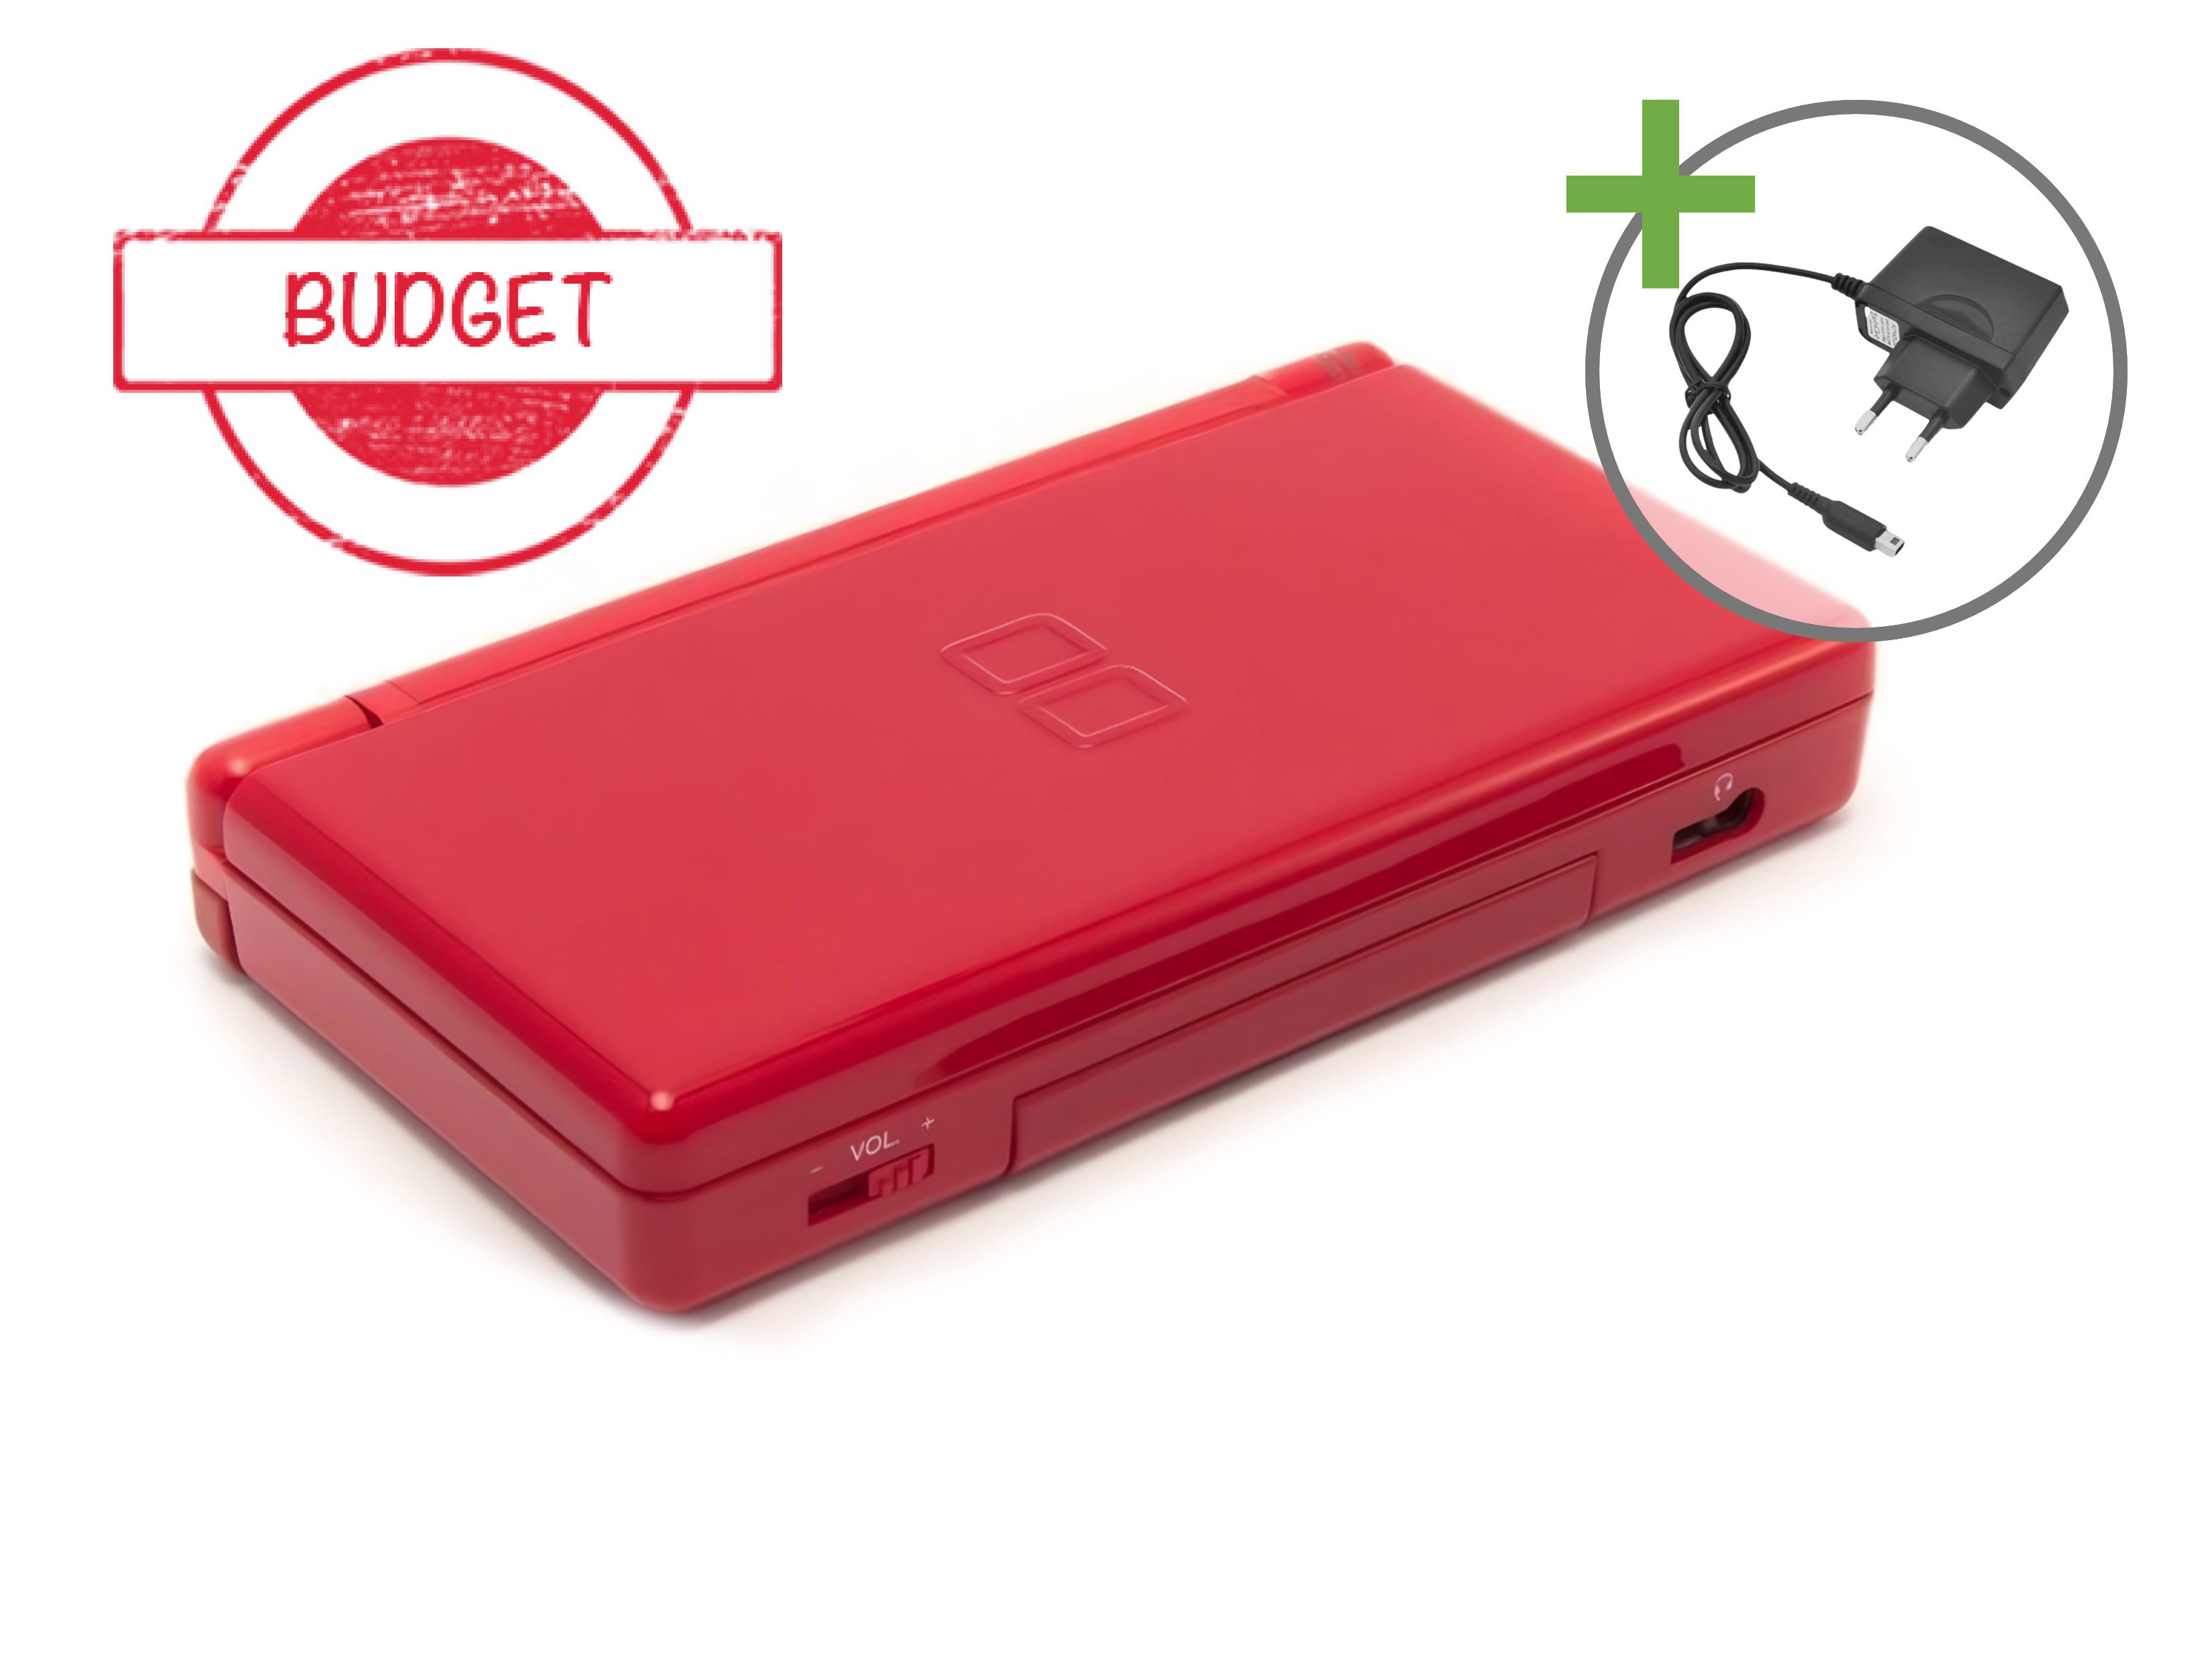 Nintendo DS Lite - Red - Budget - Nintendo DS Hardware - 3